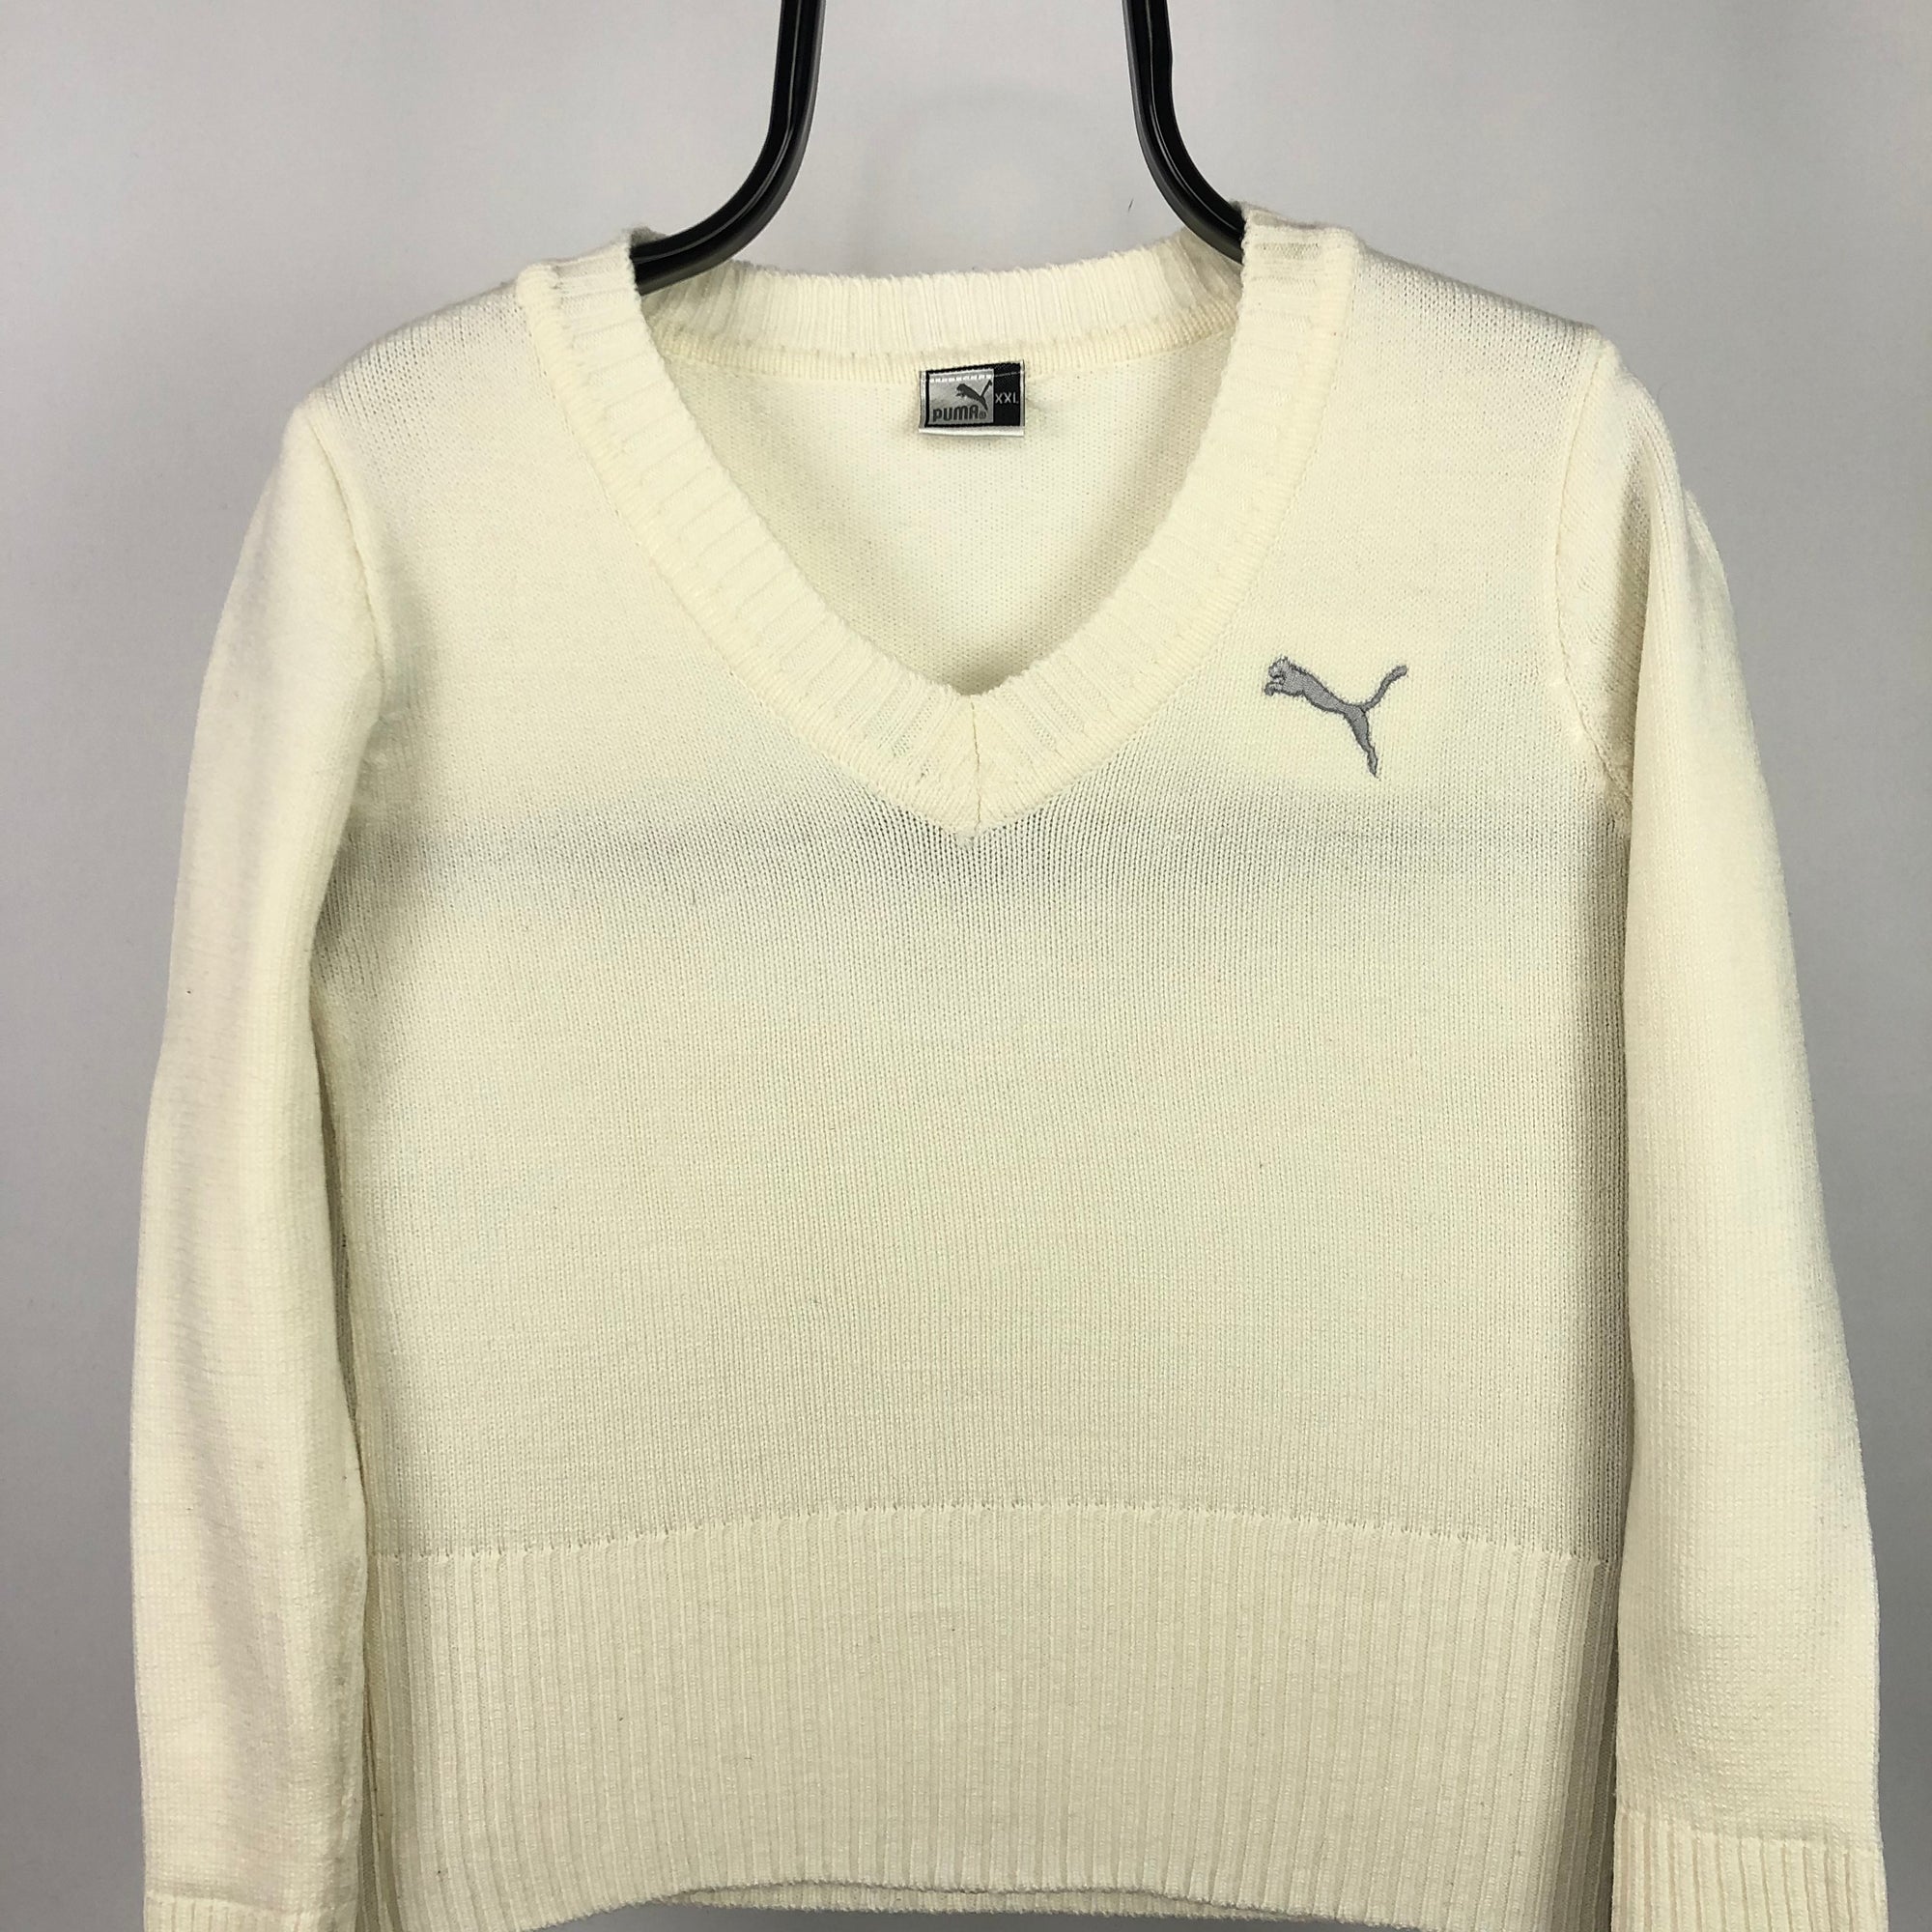 Vintage Puma Knit Sweater in Cream - Women's XS